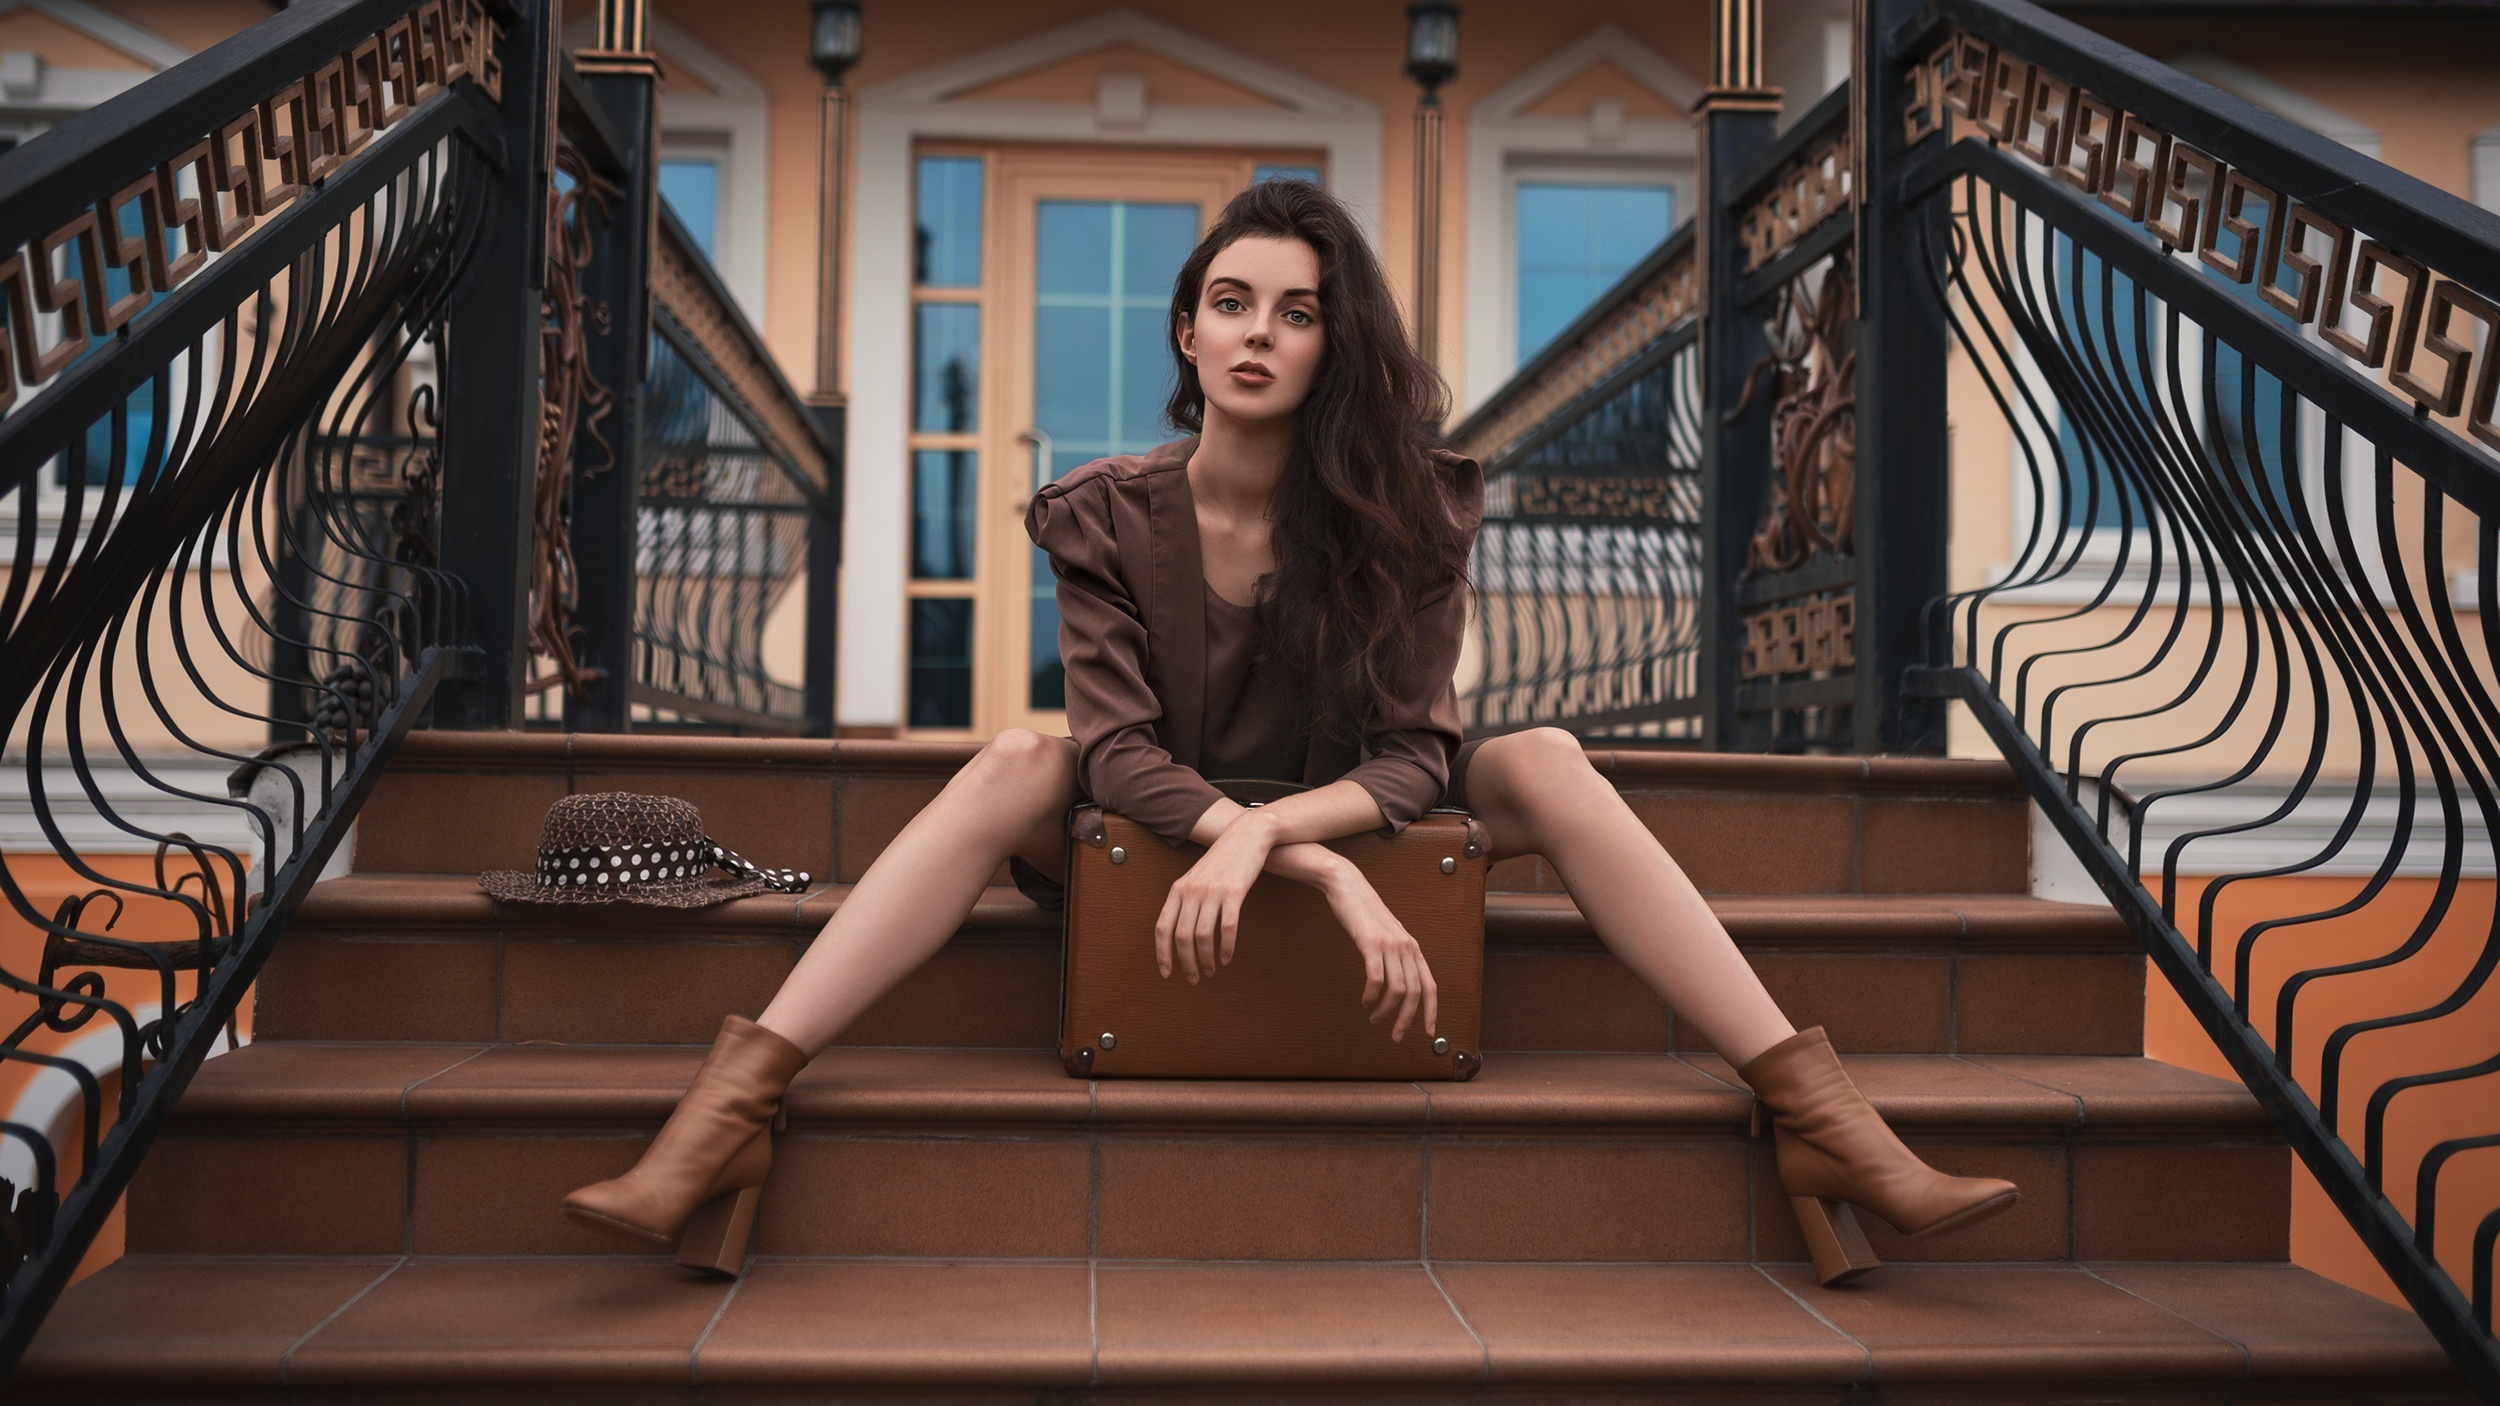 Oleg Demyanchenko Model Women Brunette Legs Jacket Hat Suitcase Stairs Ladder Sitting On The Floor L 2500x1406